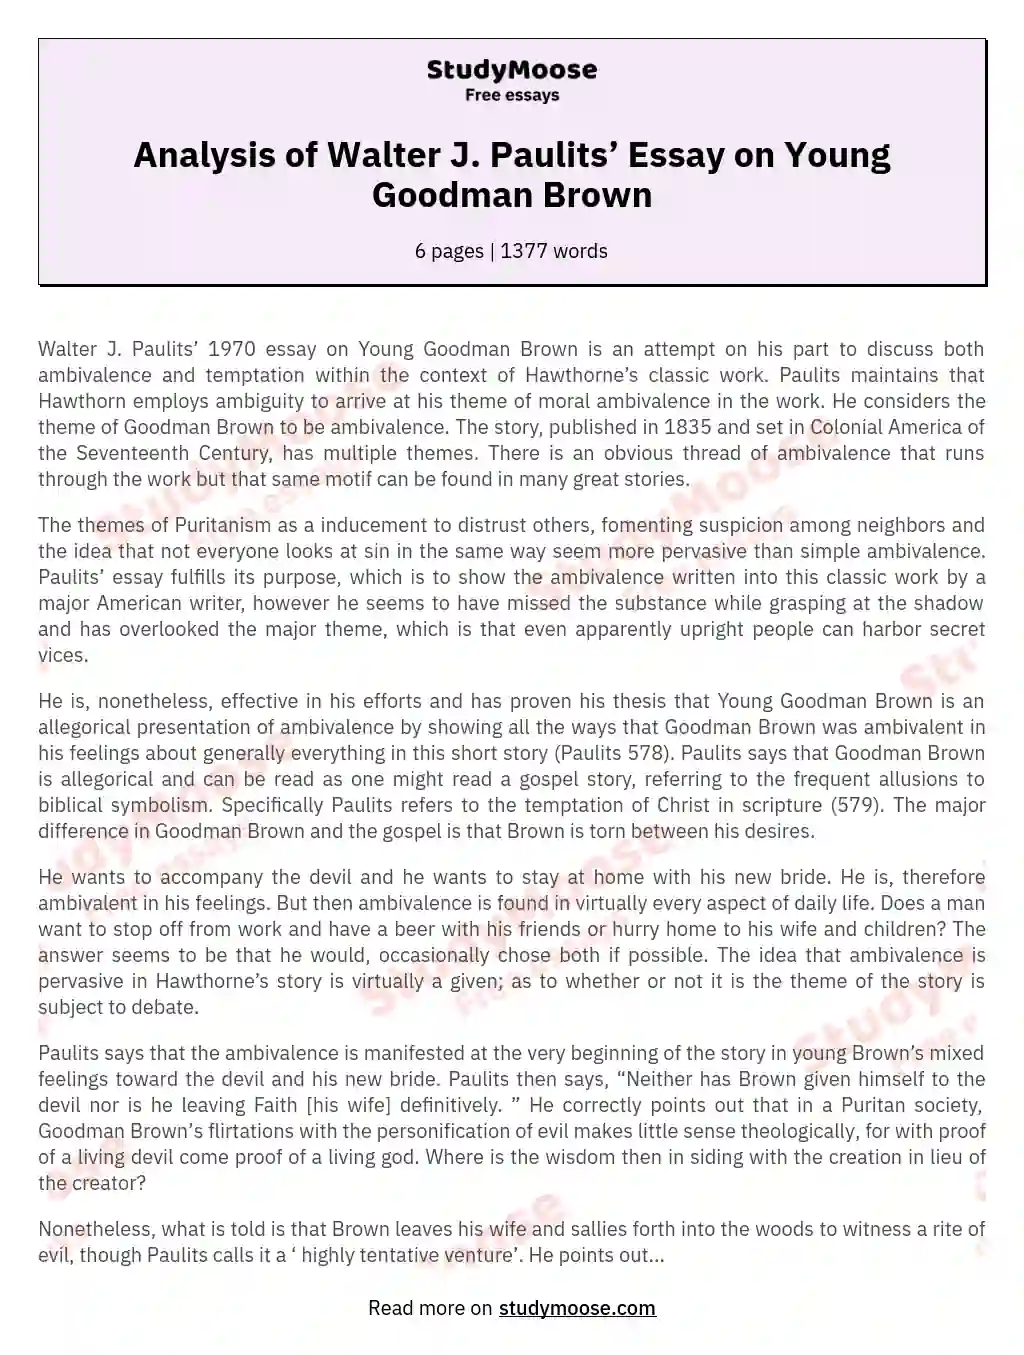 Analysis of Walter J. Paulits’ Essay on Young Goodman Brown